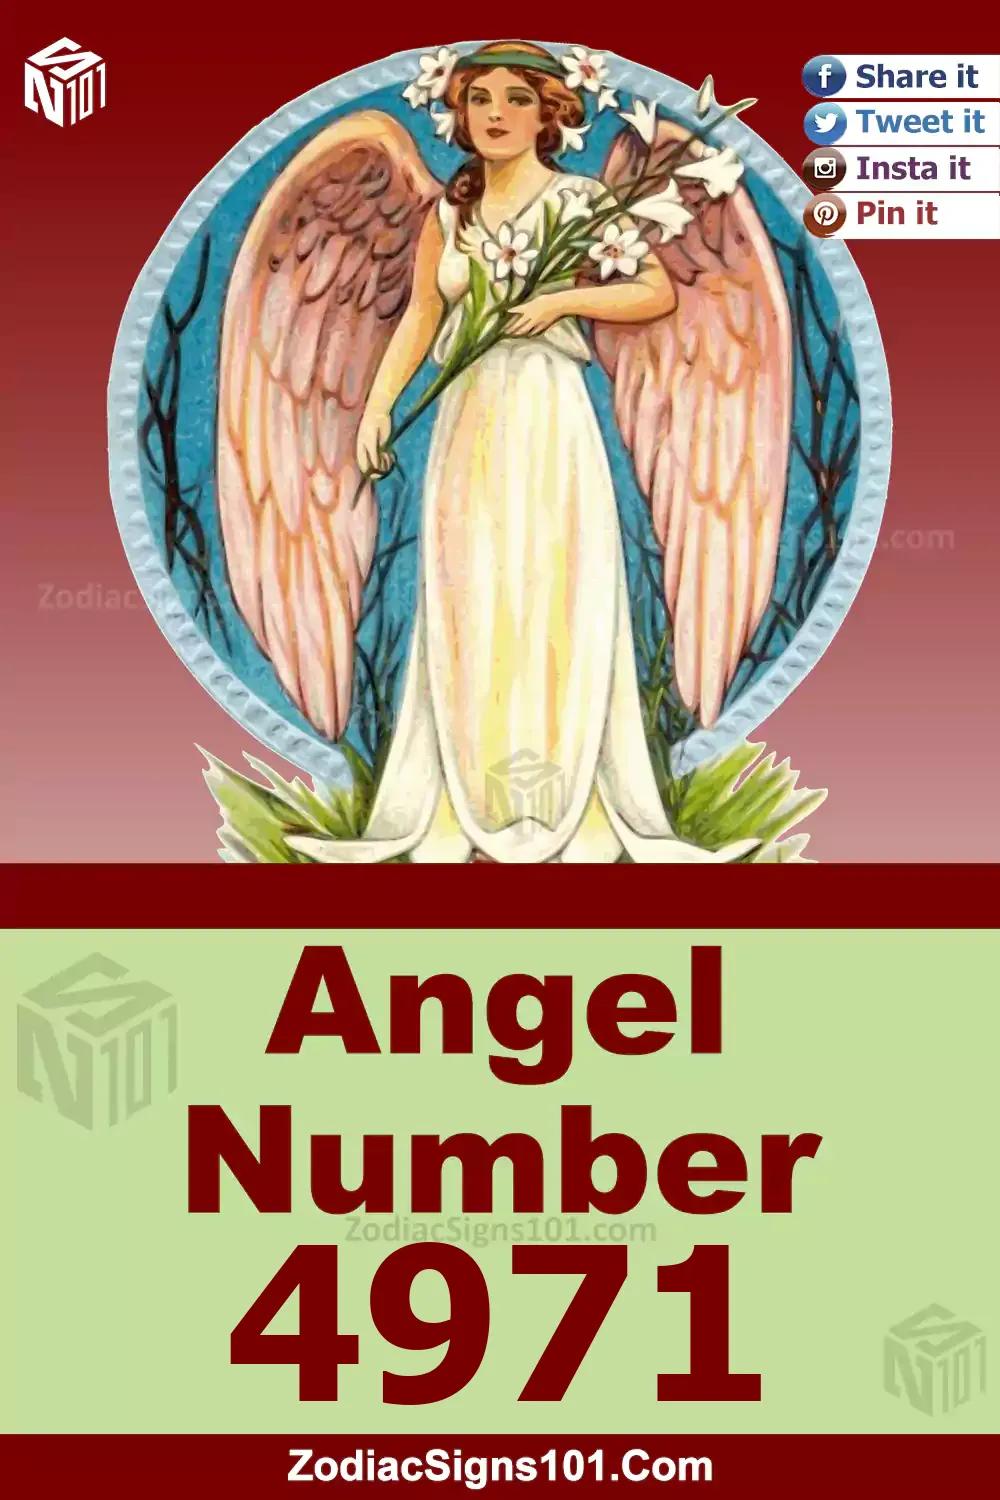 4971-Angel-Number-Meaning.jpg